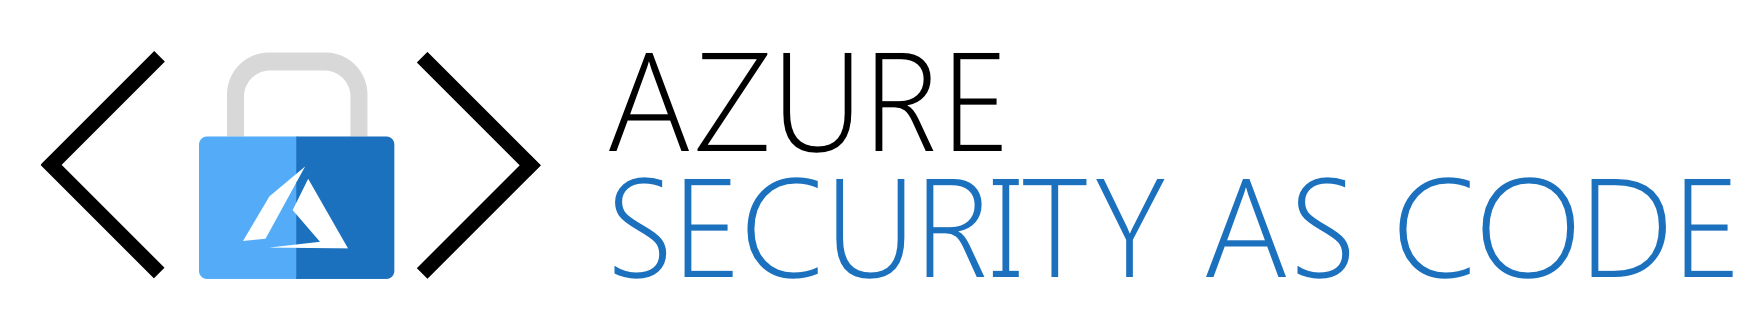 Azure Security as Code